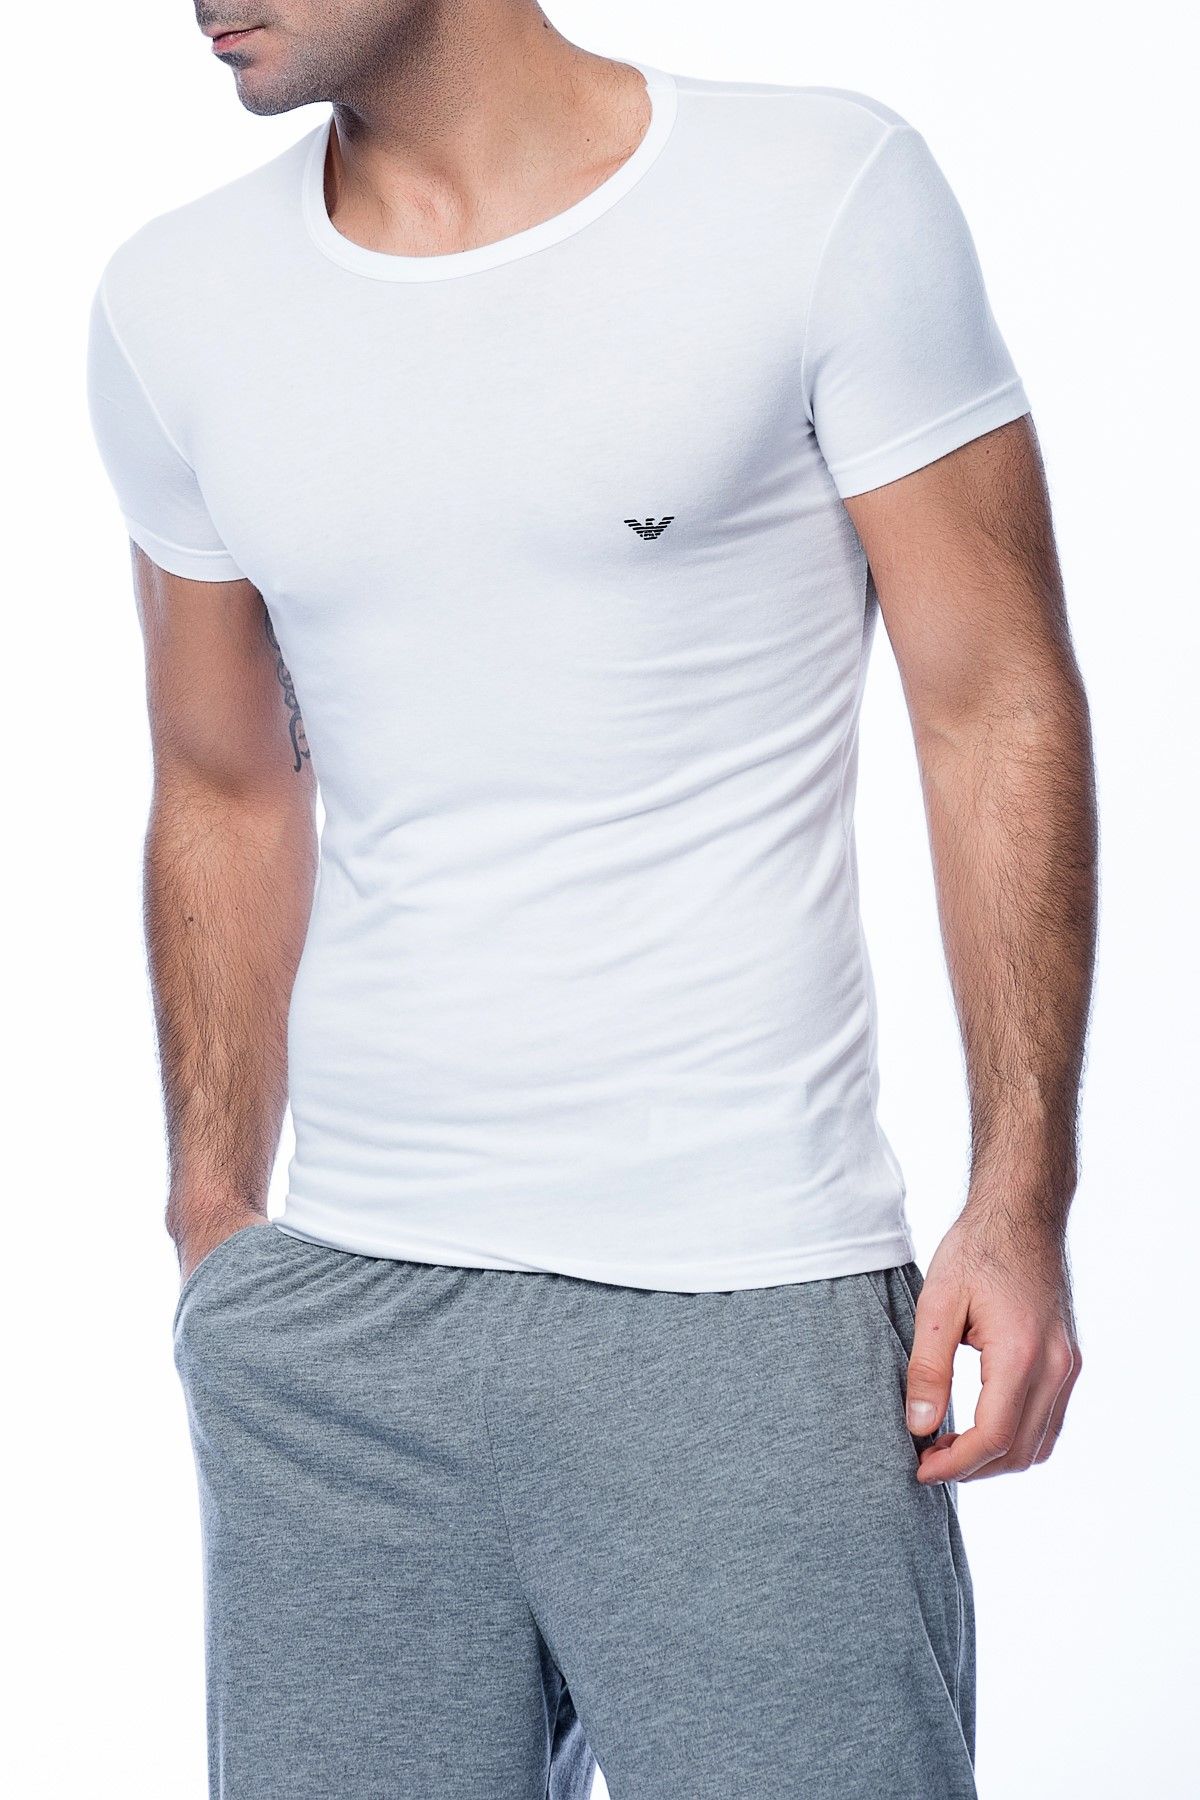 Emporio Armani Erkek Beyaz T-Shirt